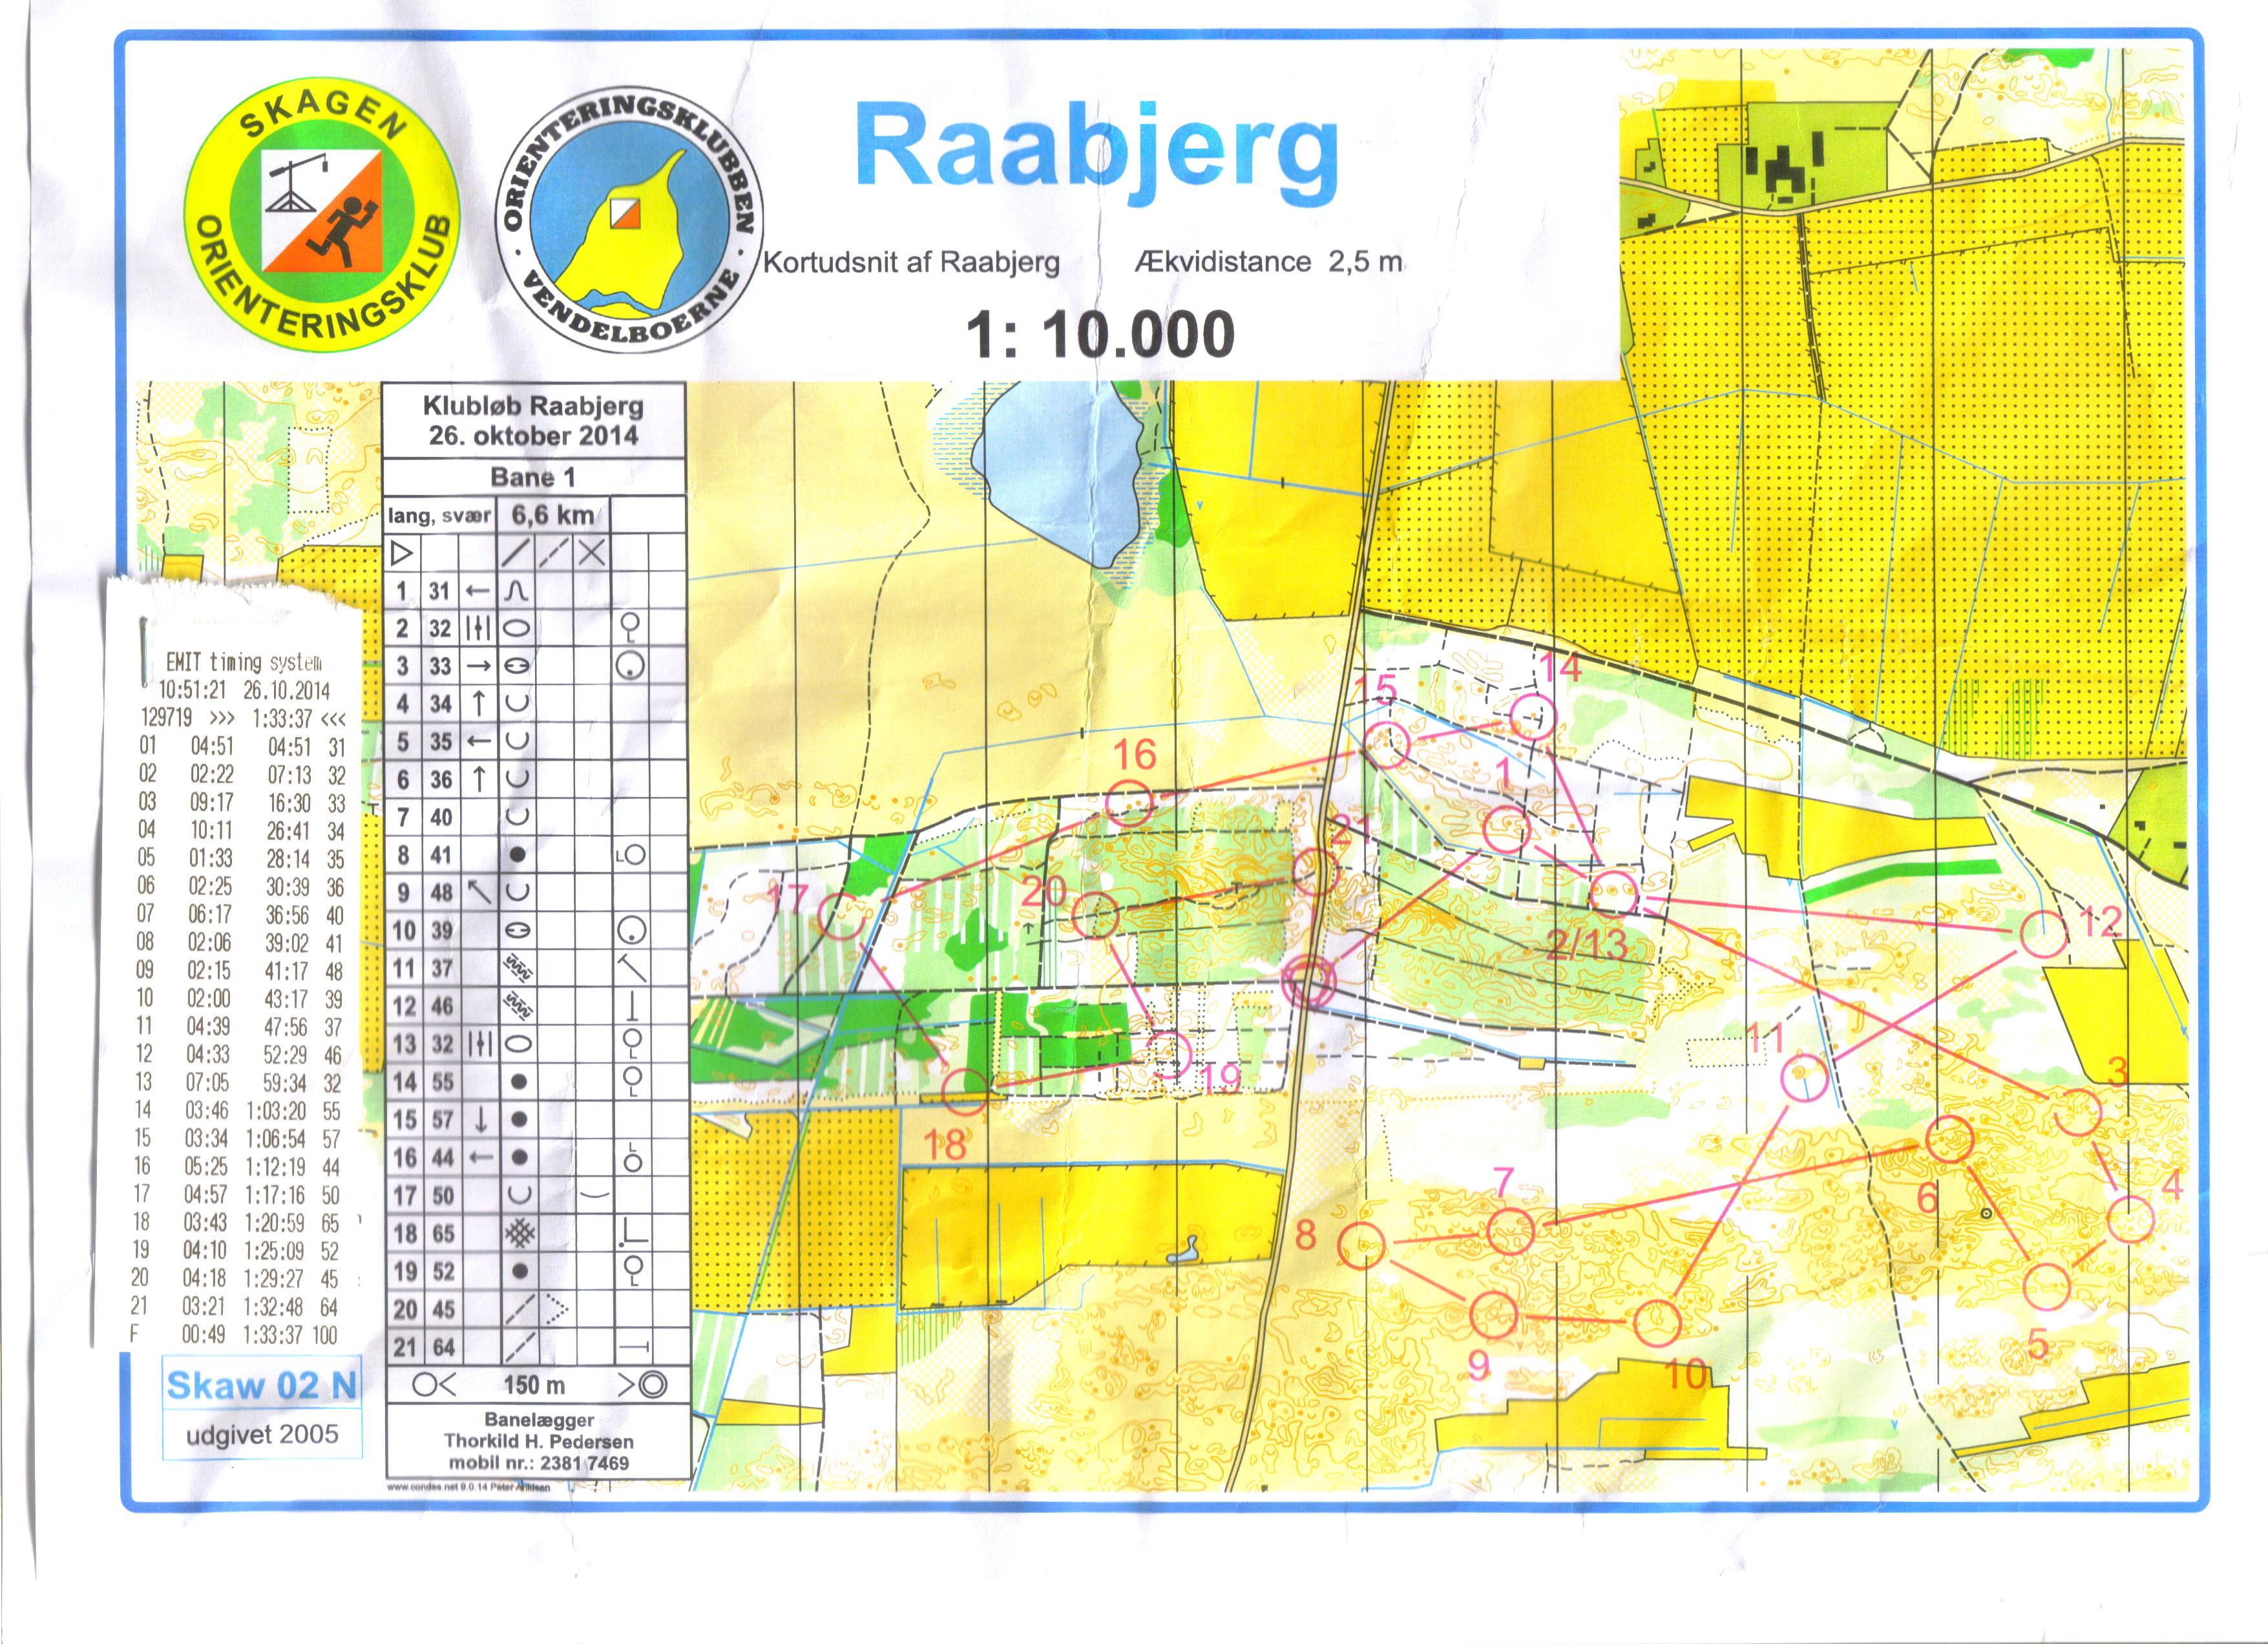 Raabjerg (27/10/2014)